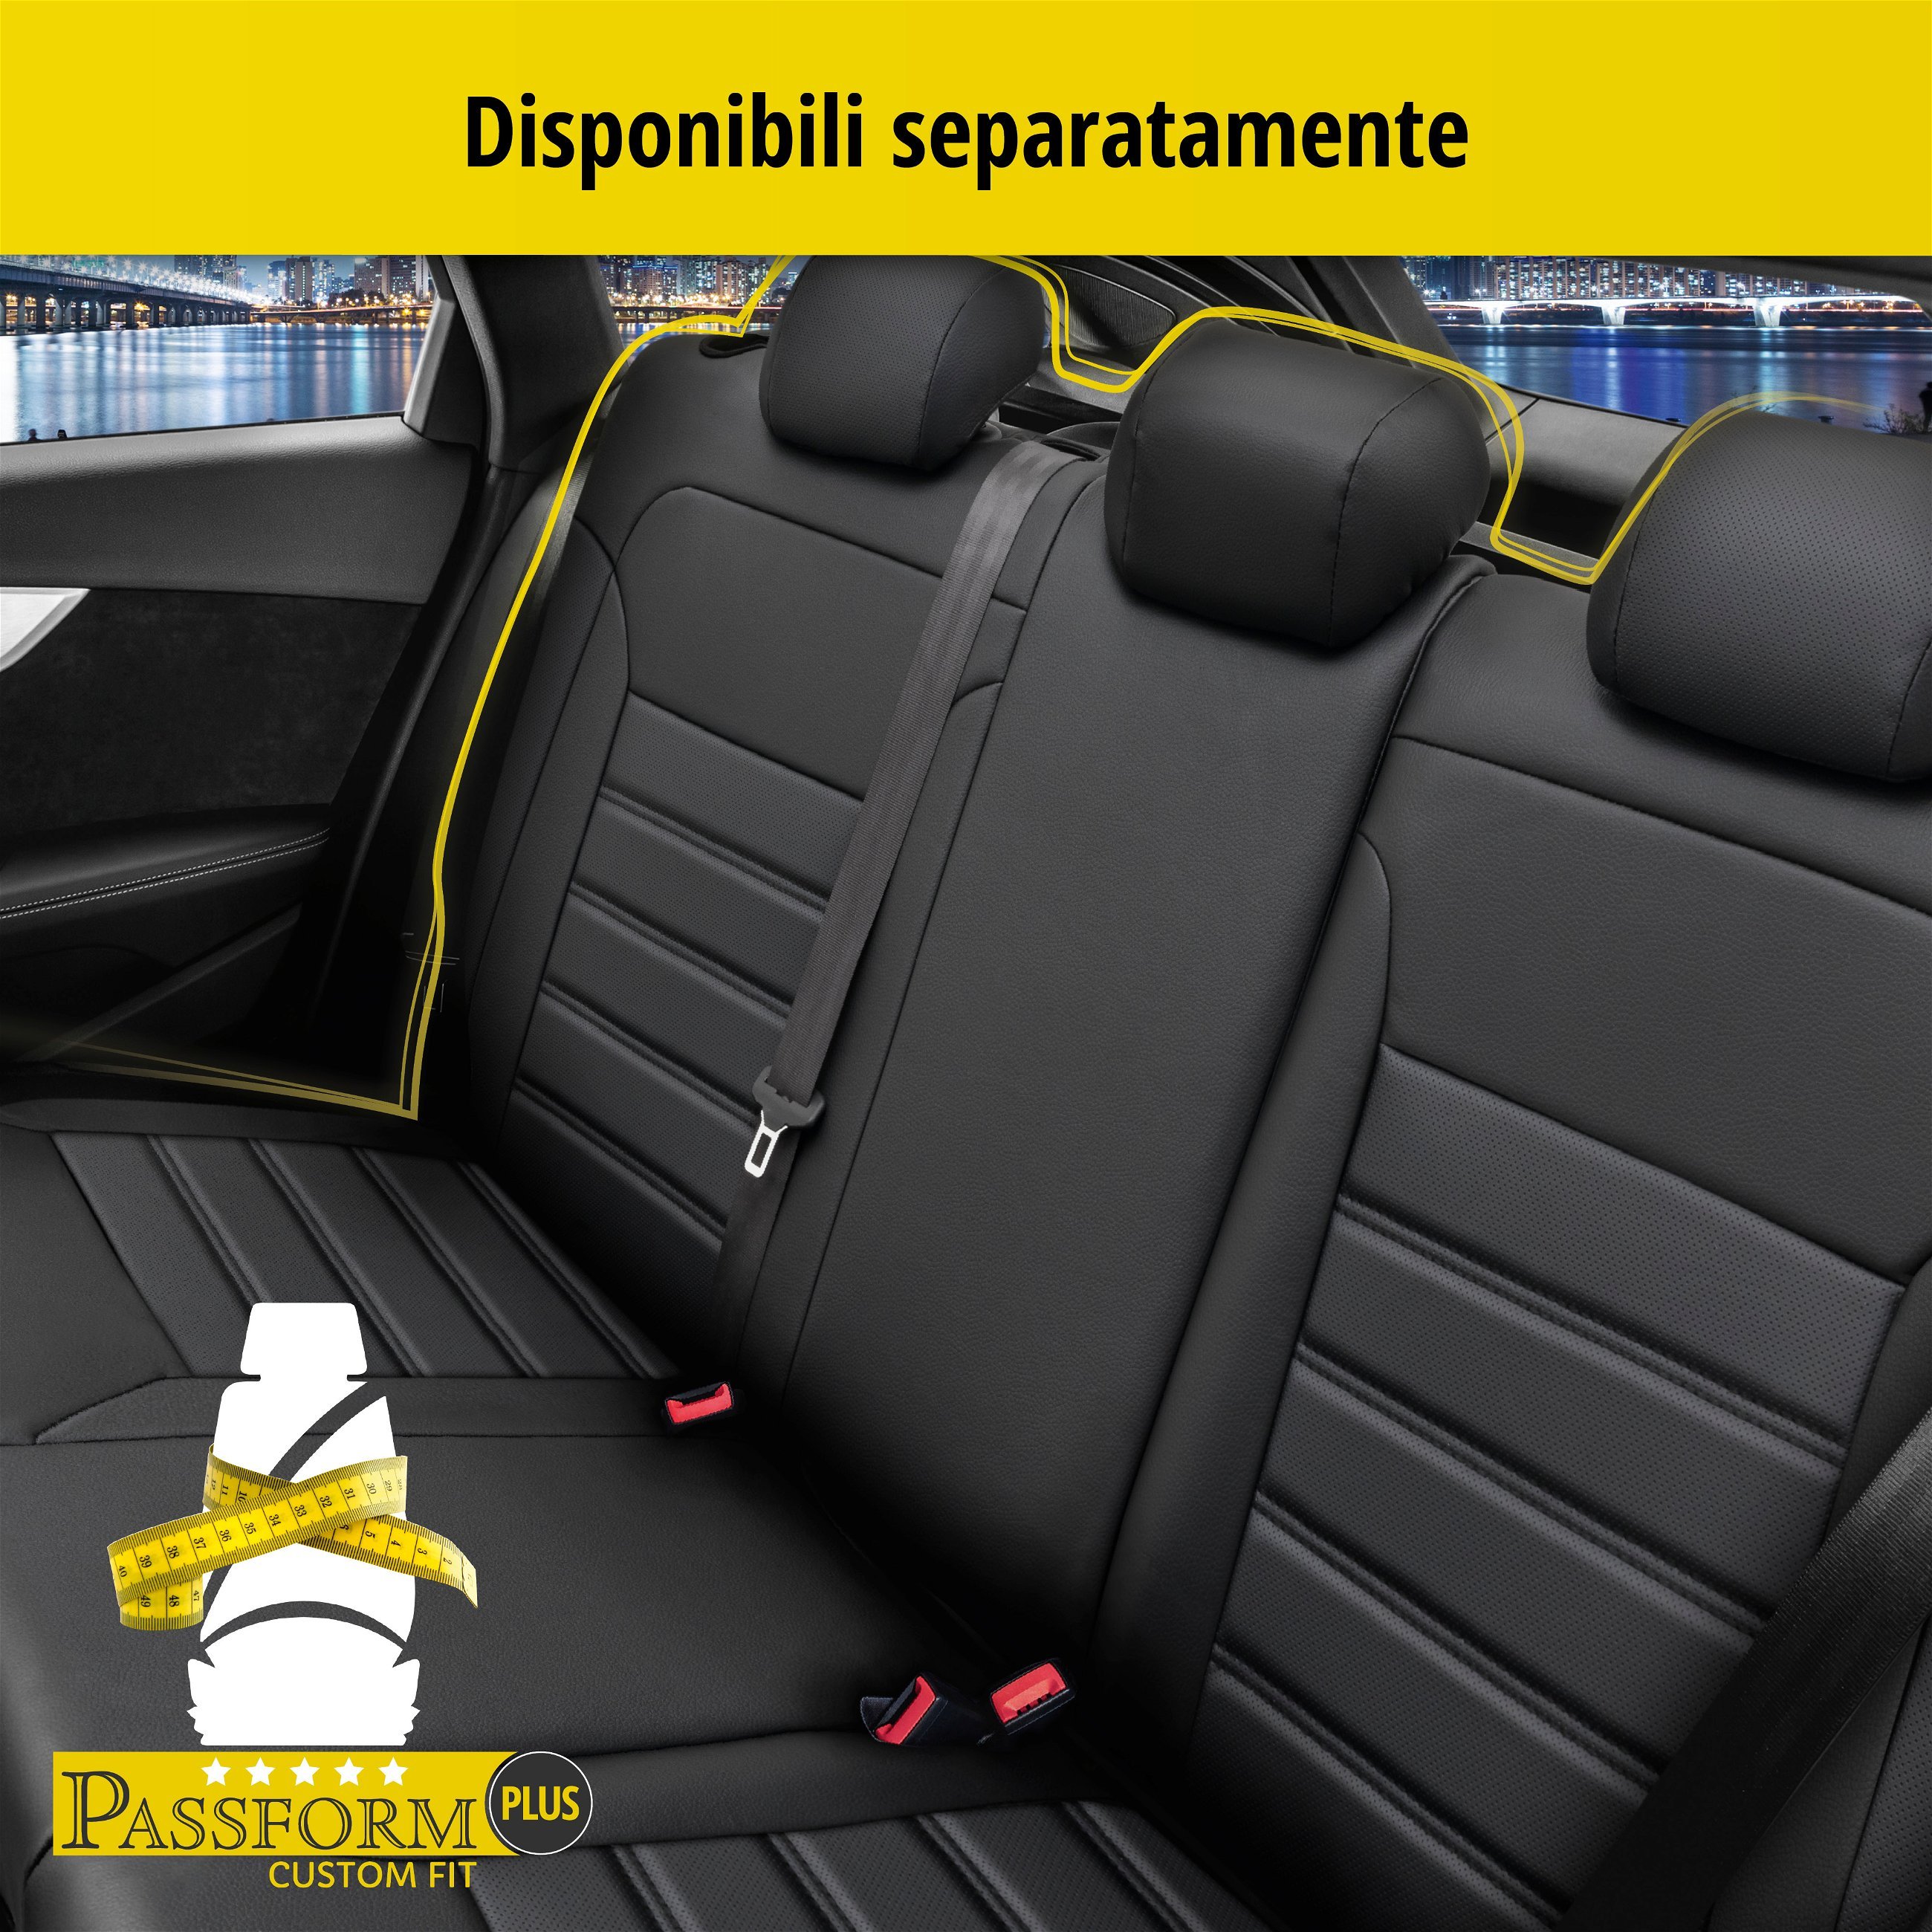 Coprisedili Robusto per Renault Kadjar (HA, HL) 06/2015-Oggi, 2 coprisedili singoli per sedili normali